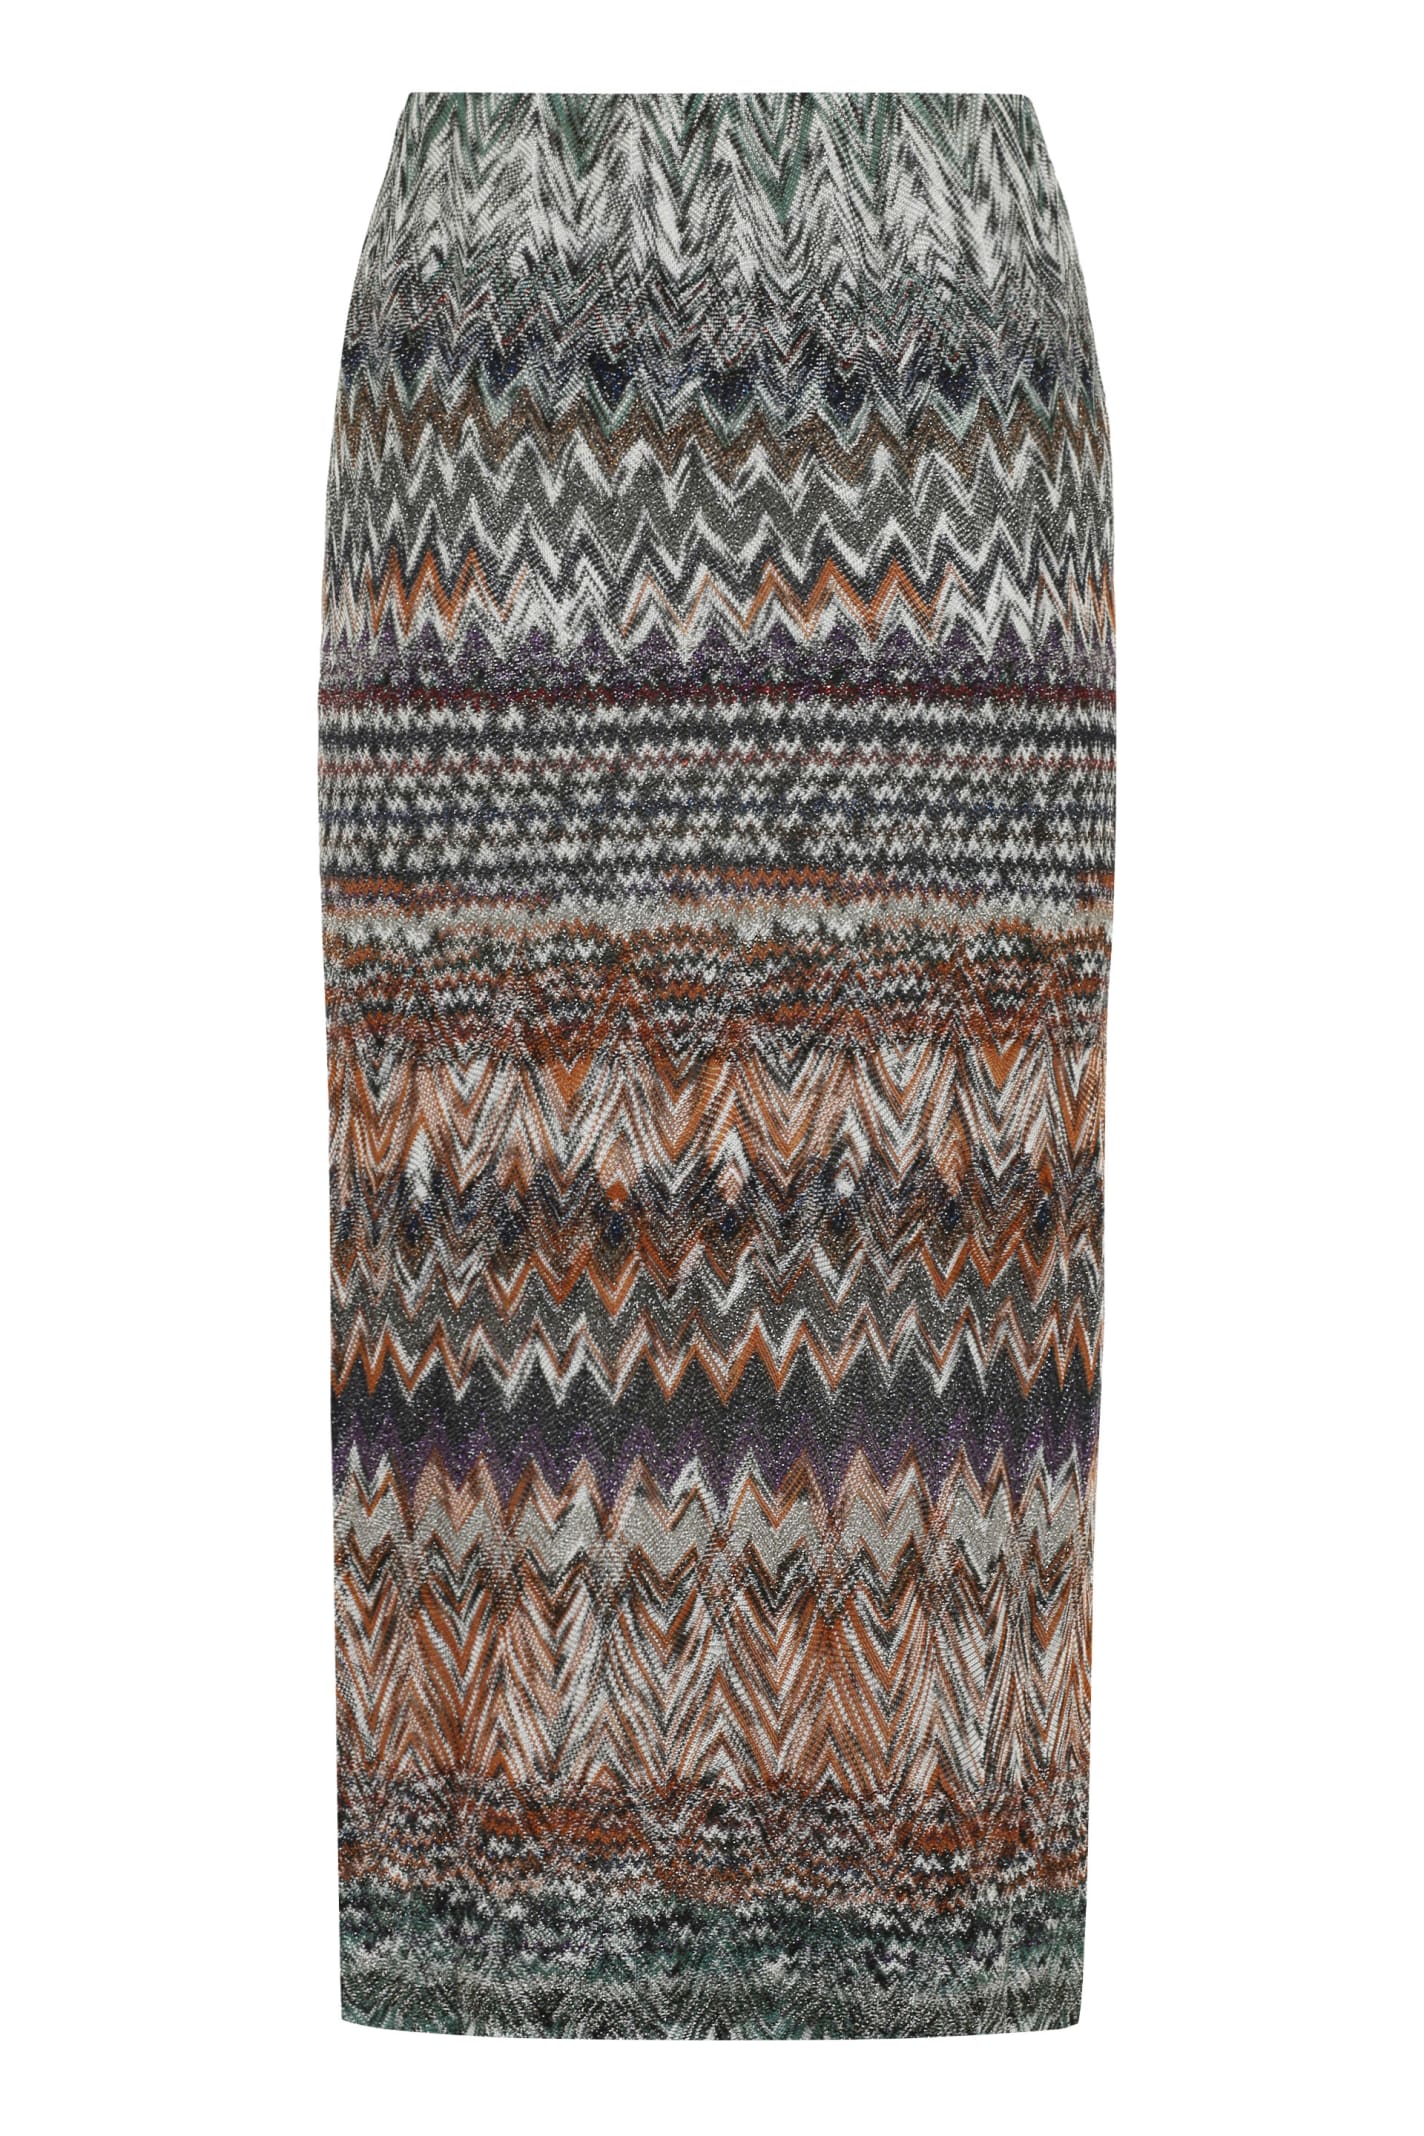 Missoni Chevron Motif Knitted Skirt